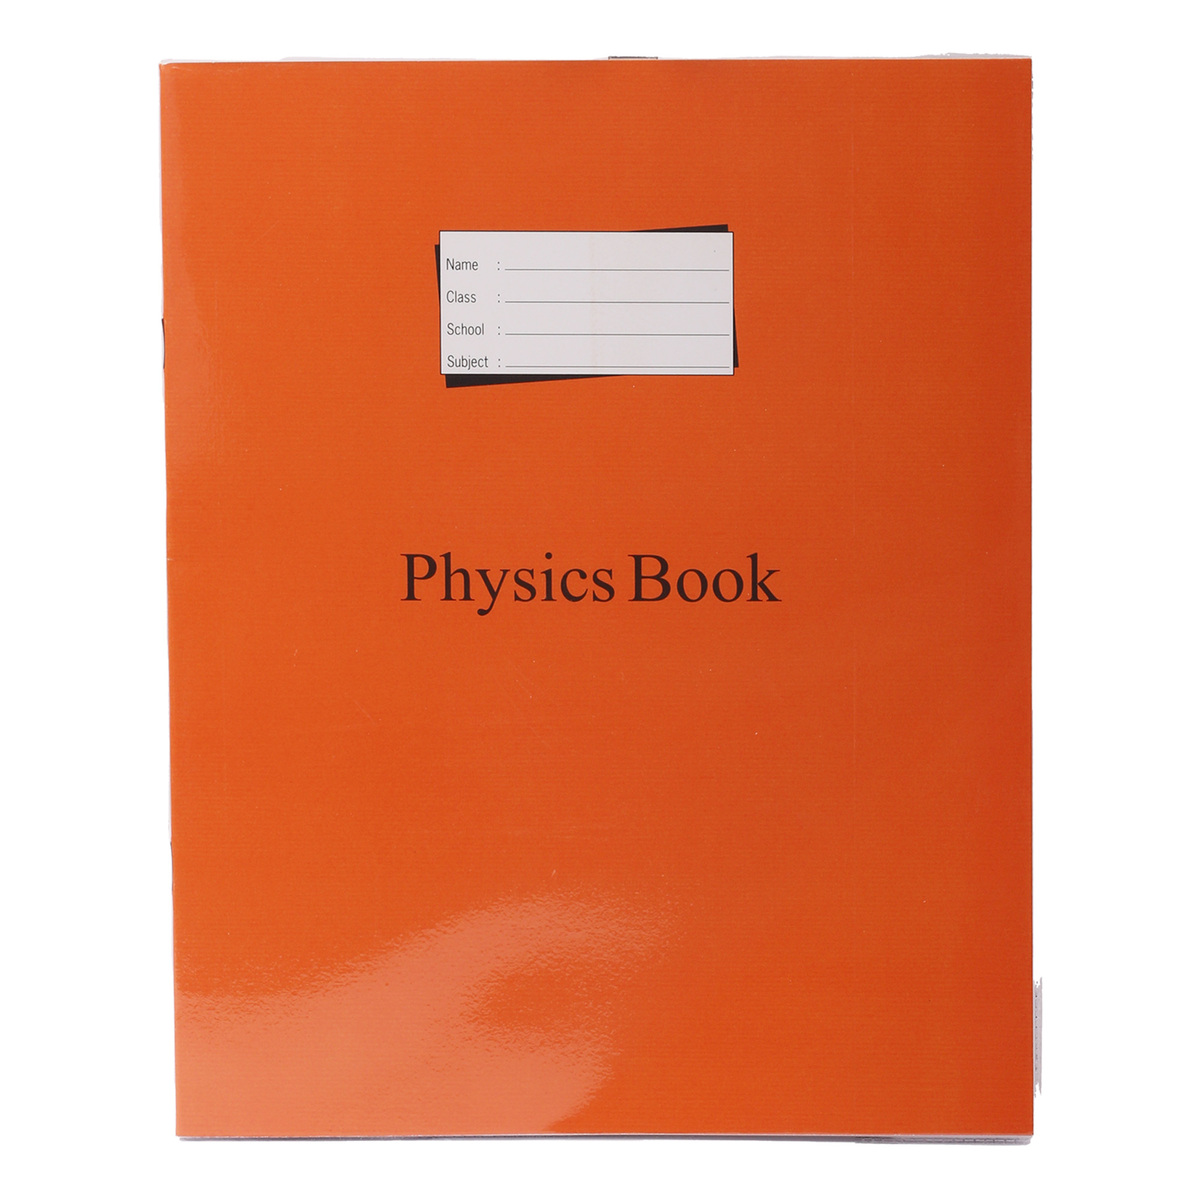 Sadaf Physics Book Brown 36 Sheets